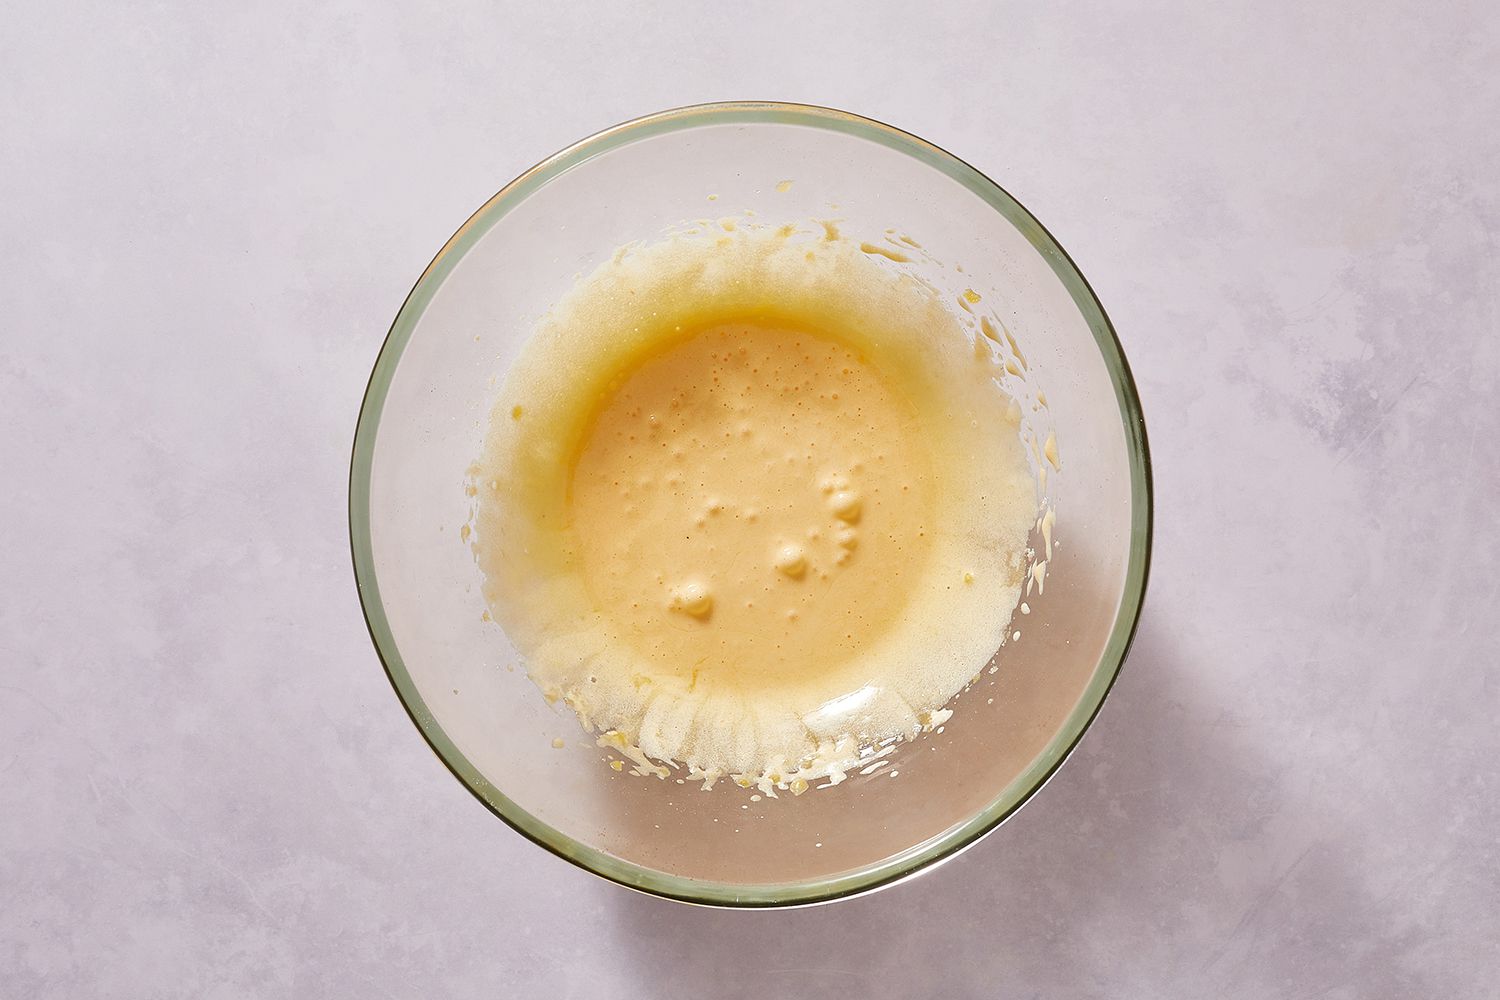 Egg yolks and sugar mixture in a bowl 